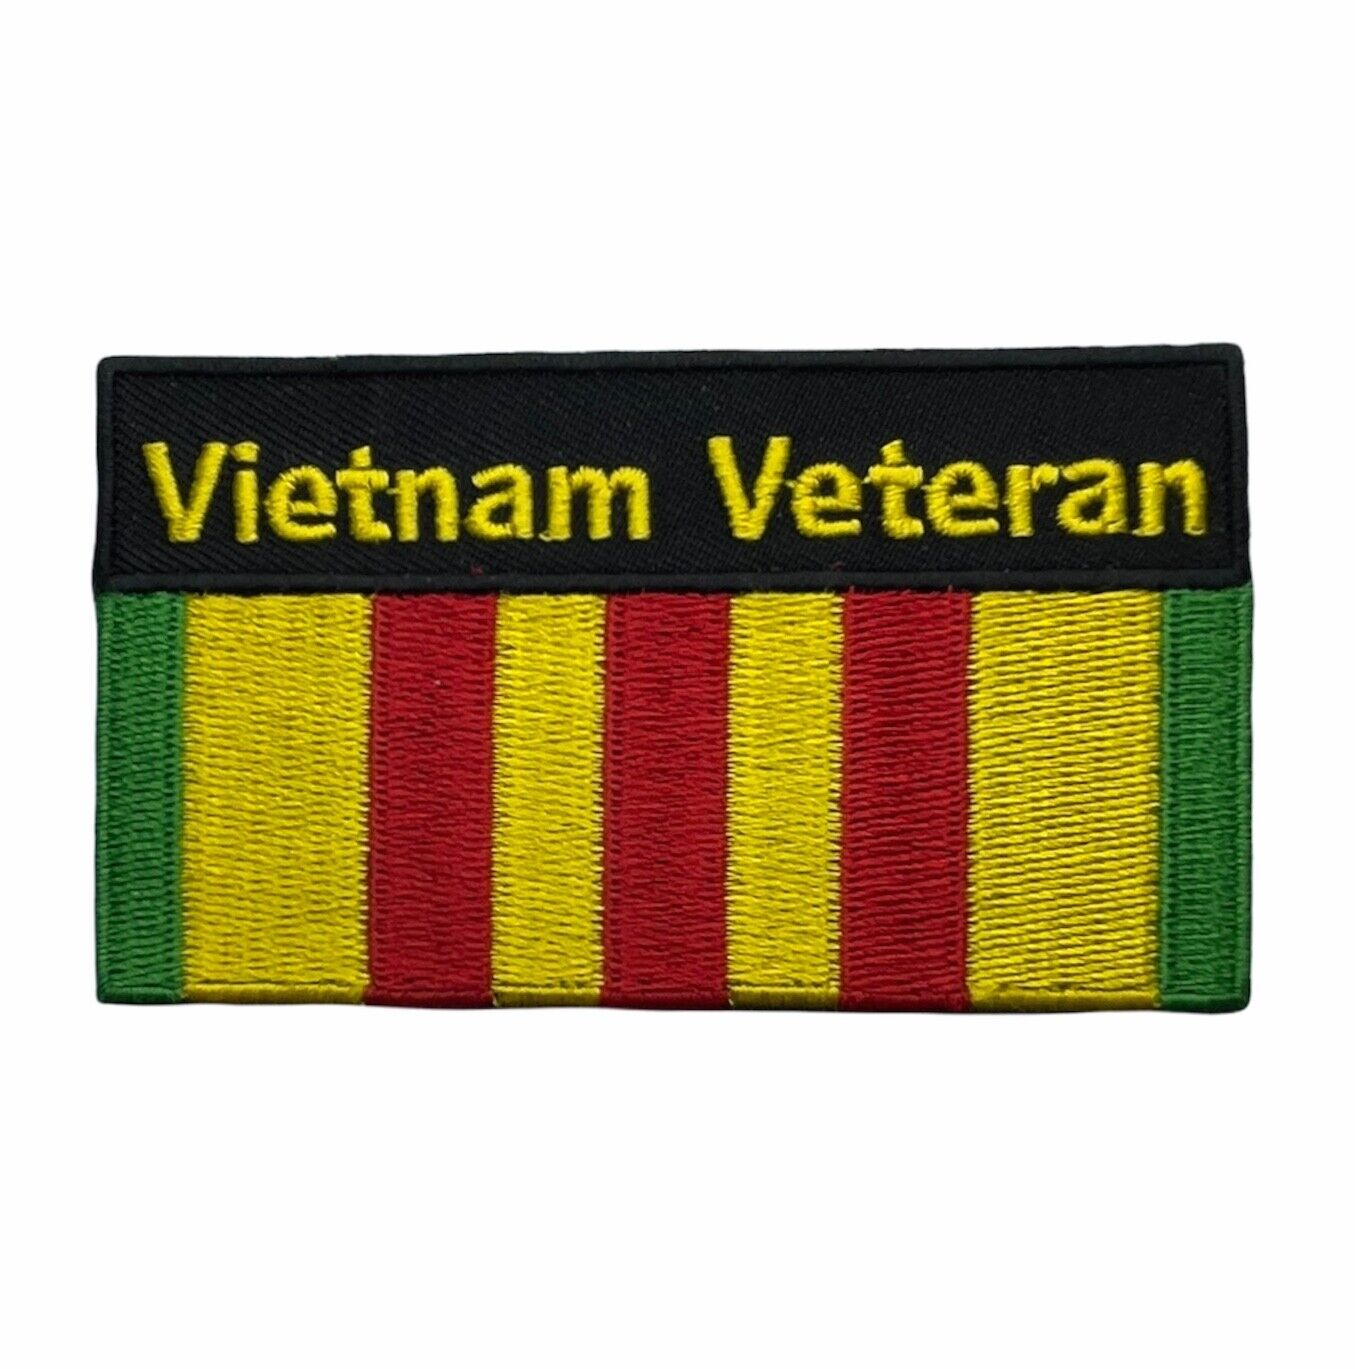 Vietnam Veteran Service Ribbon 3.5 x 2 Inch Embroidered Patch PW F5D25U